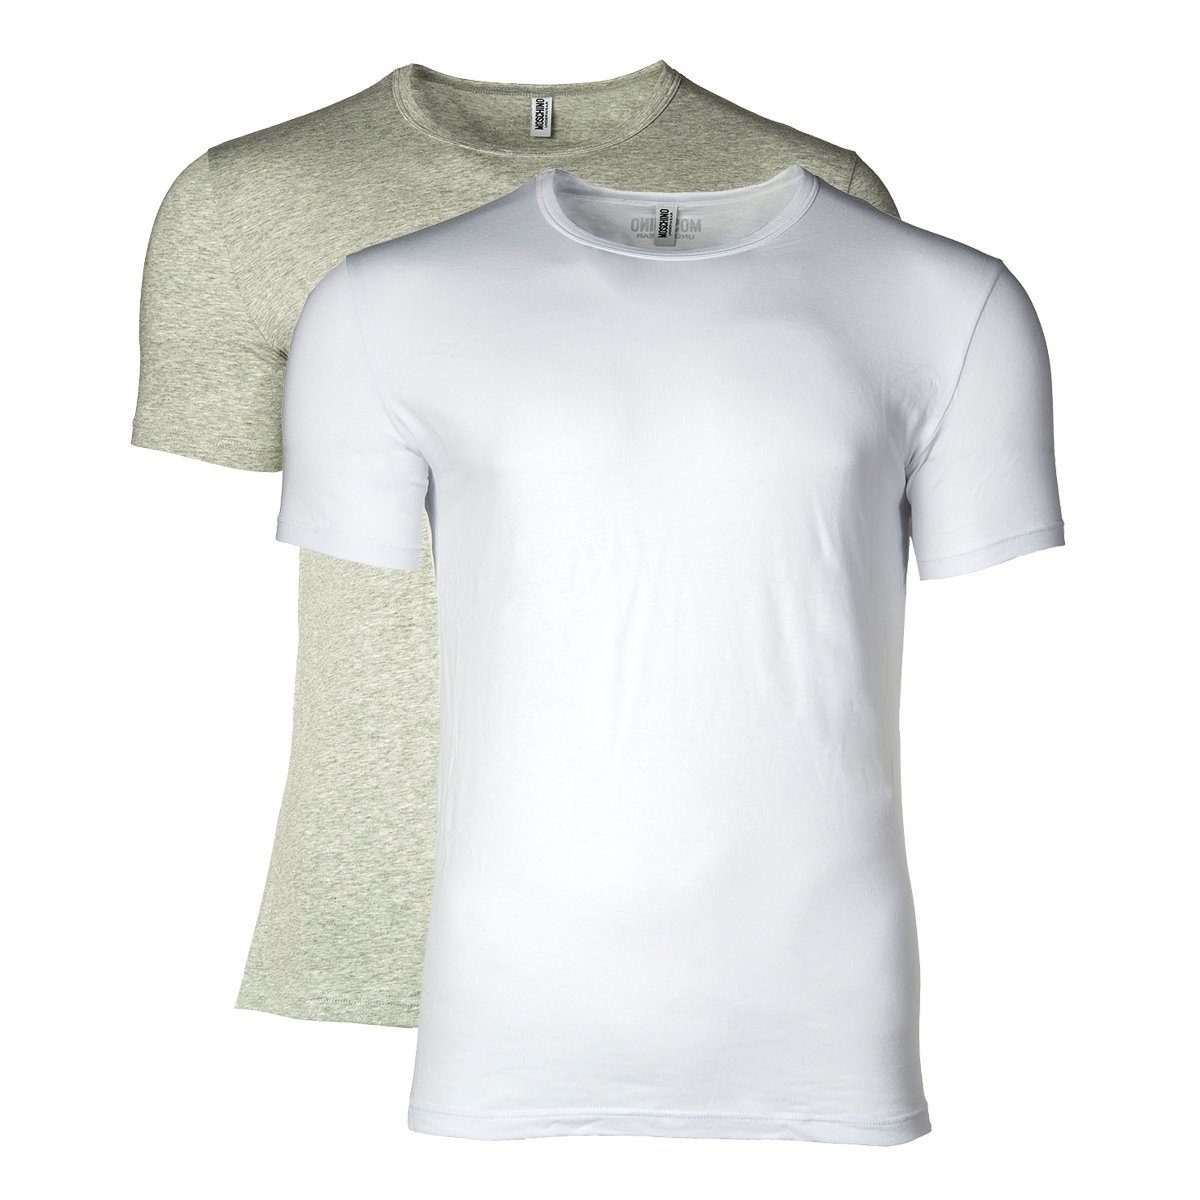 Moschino T-Shirt Herren T-Shirt 2er Pack - Crew Neck, Rundhals Weiß/Grau